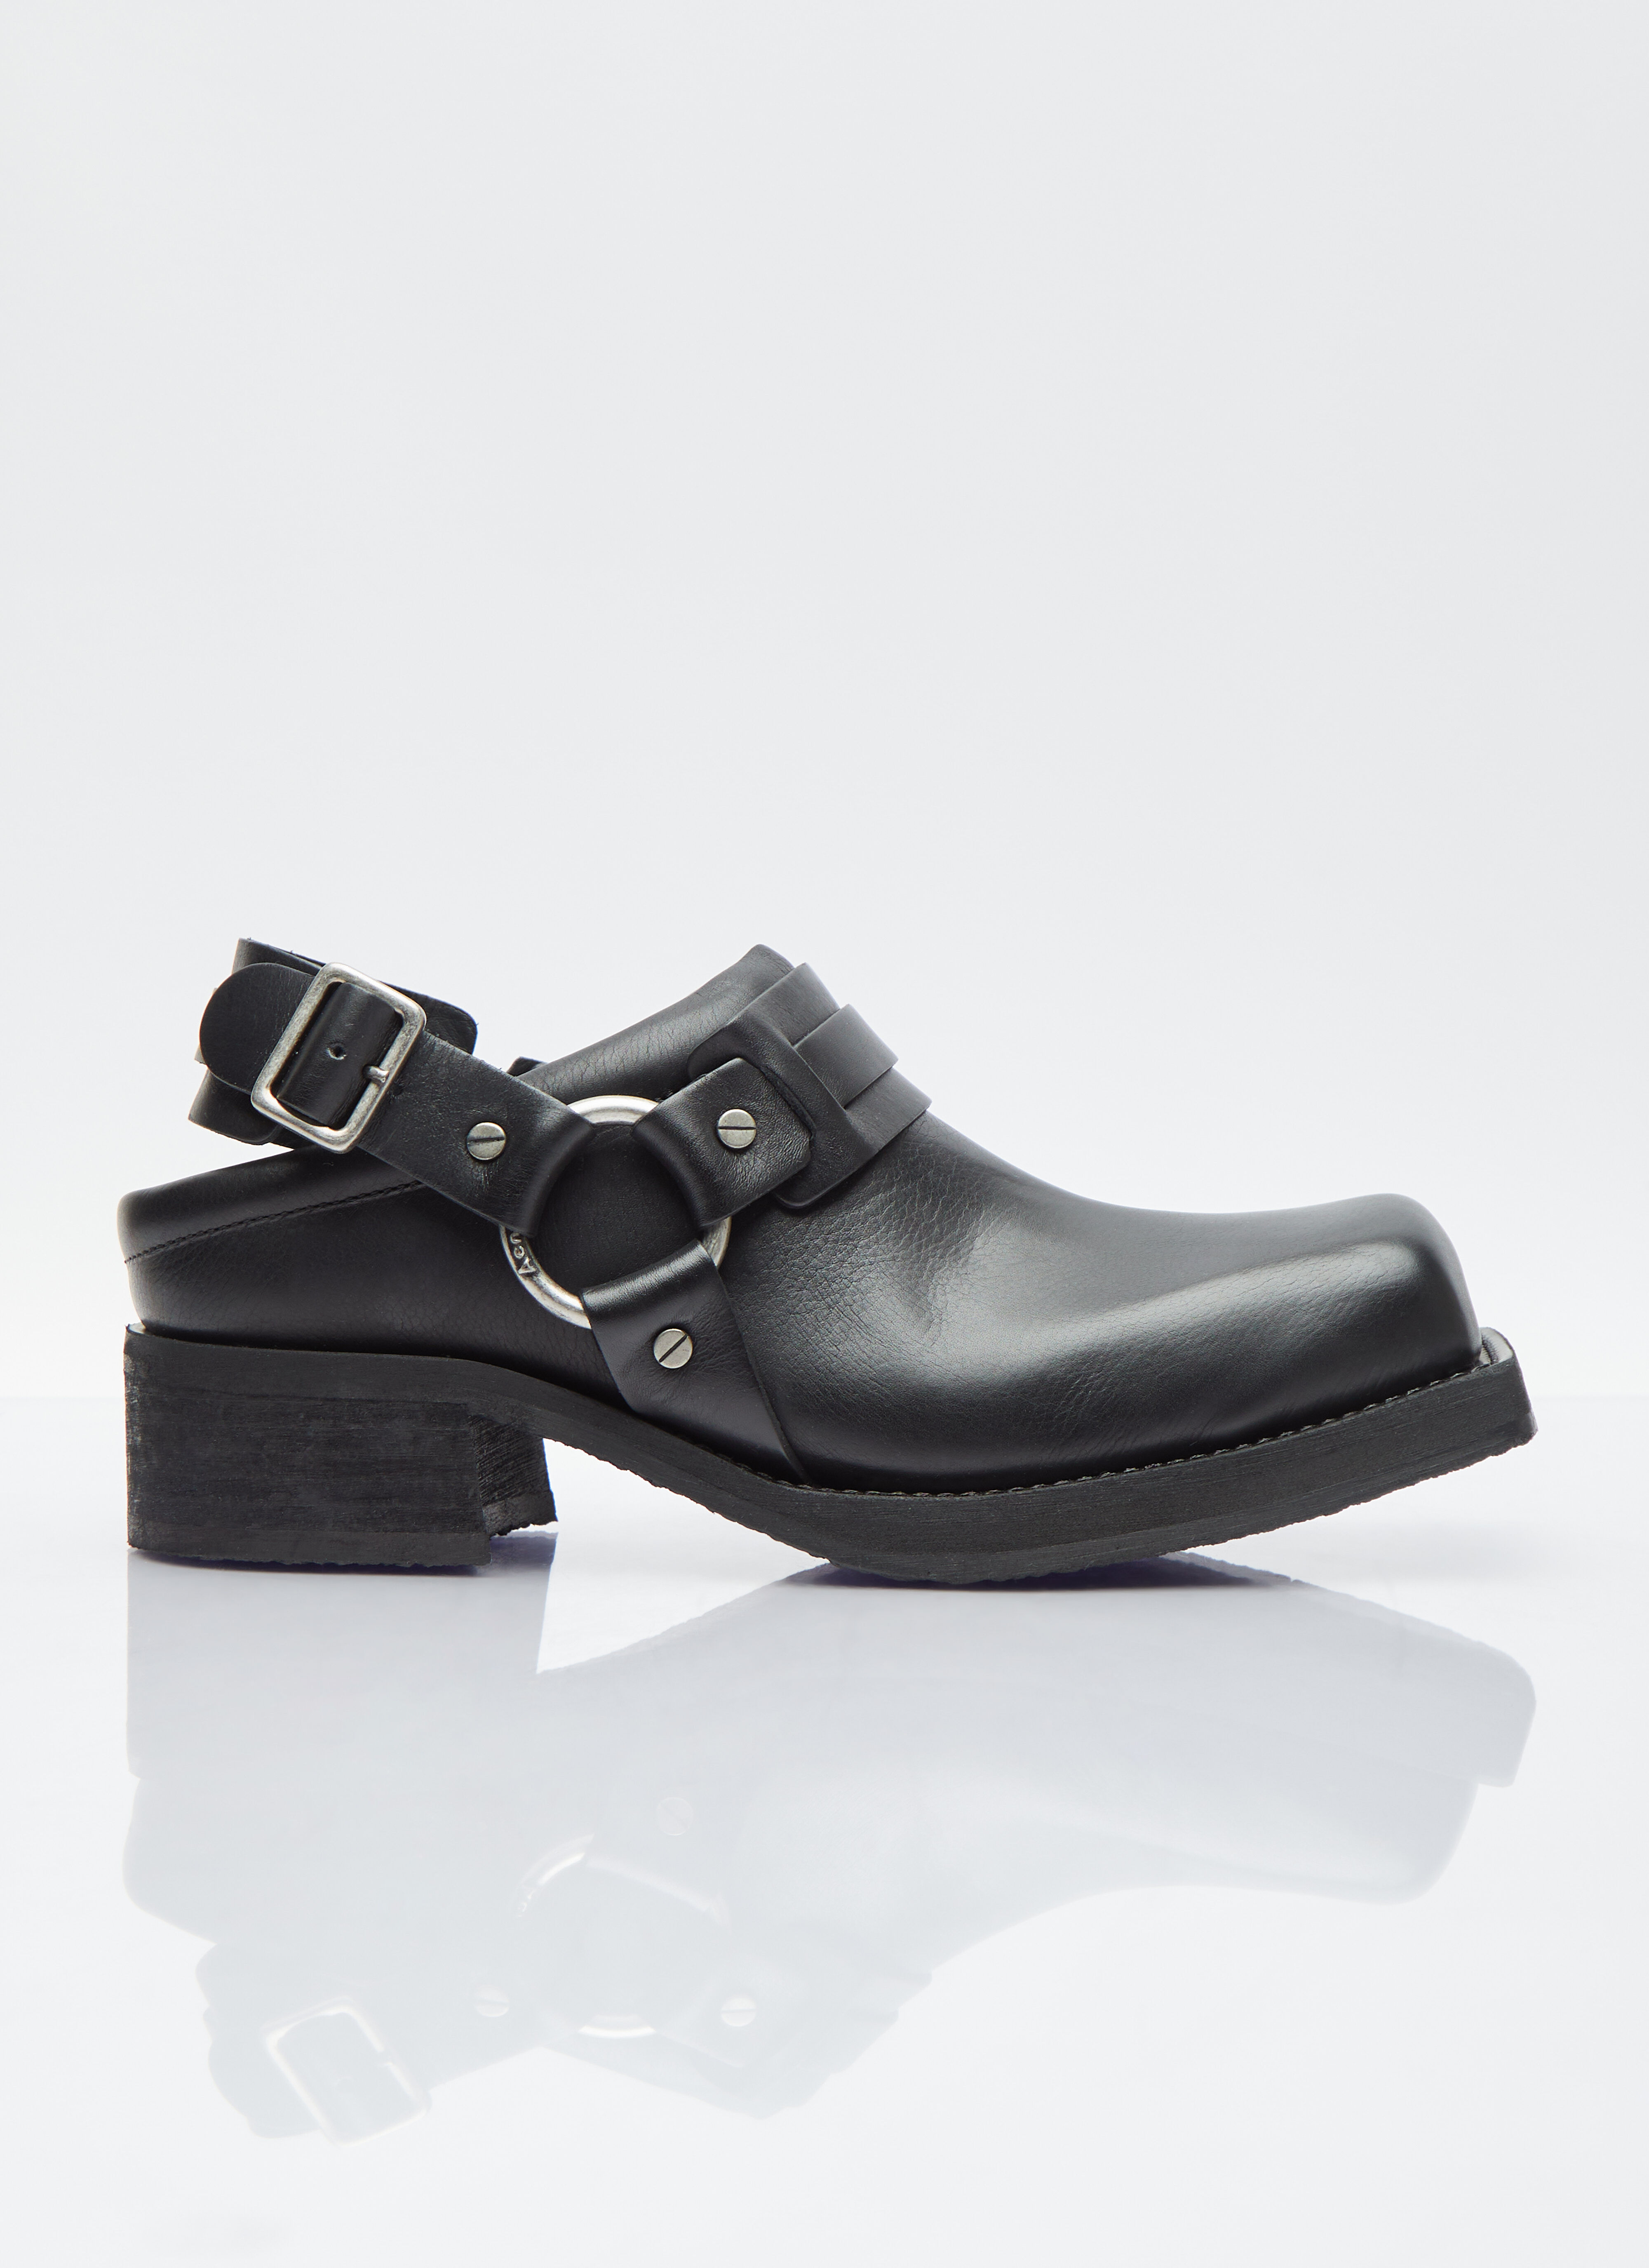 Acne Studios Buckle Leather Shoes Black acn0244026